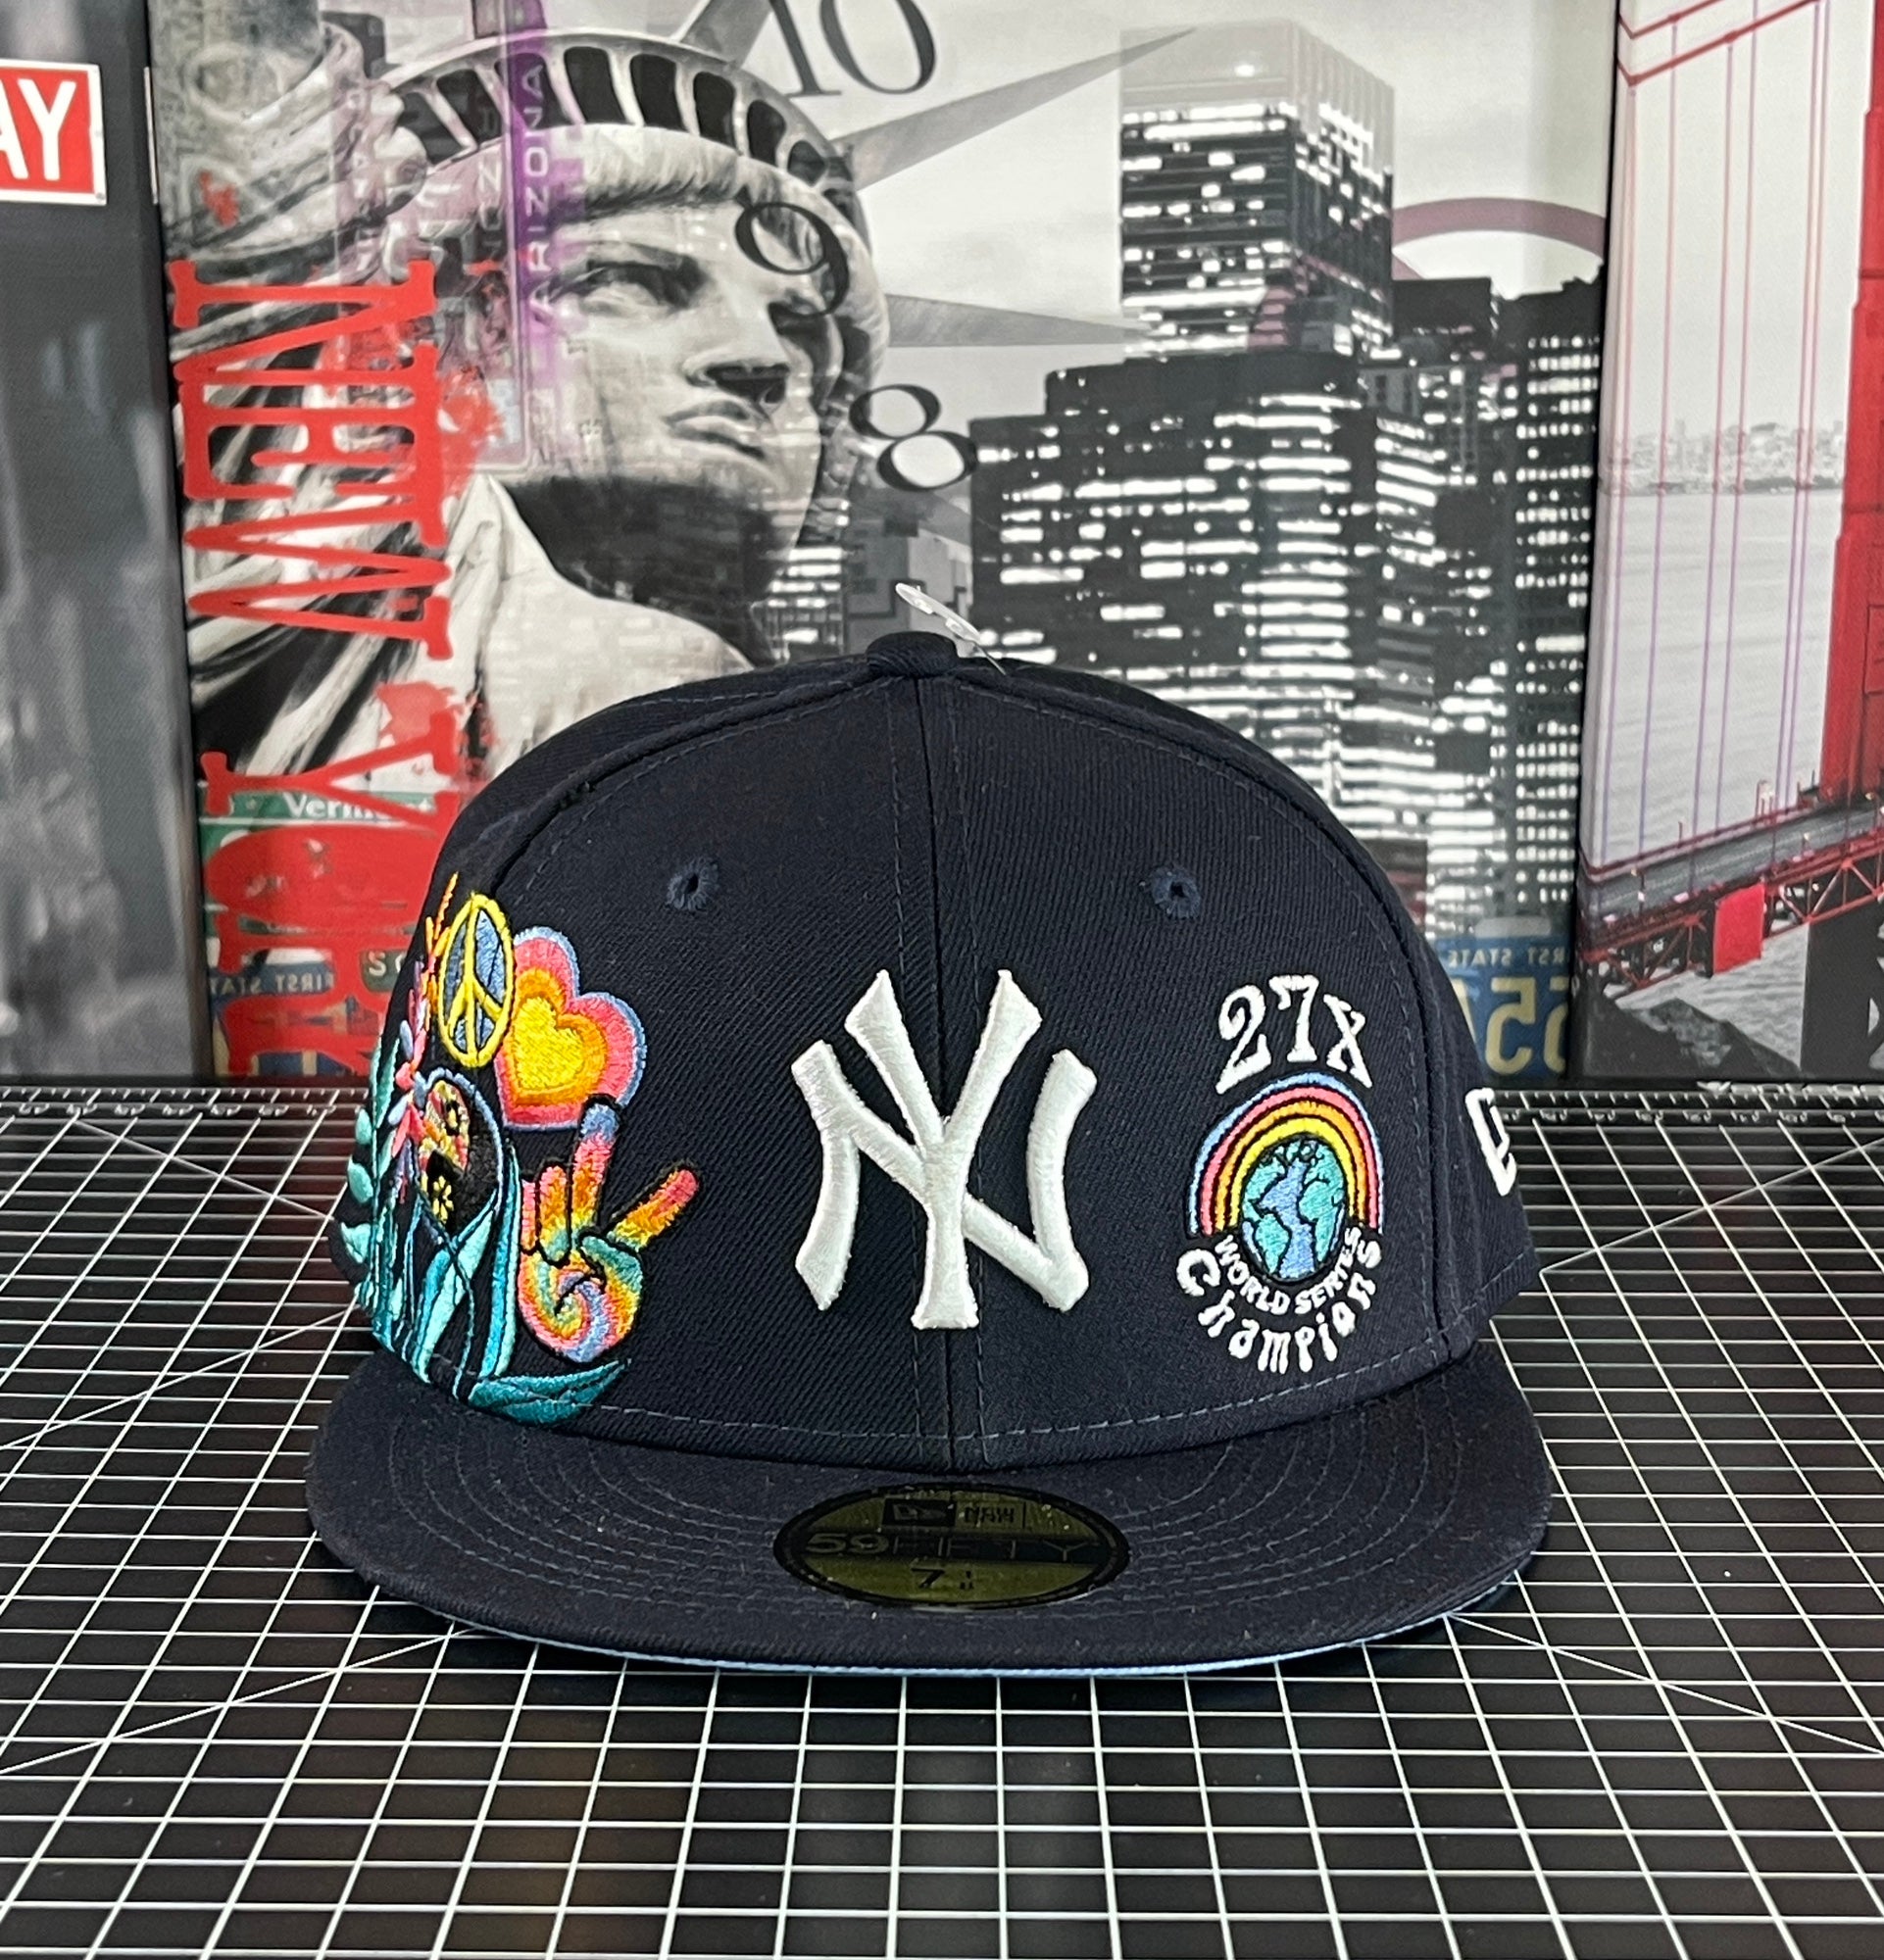  New Era 59Fifty Hat New York Yankees MLB Basic Blue